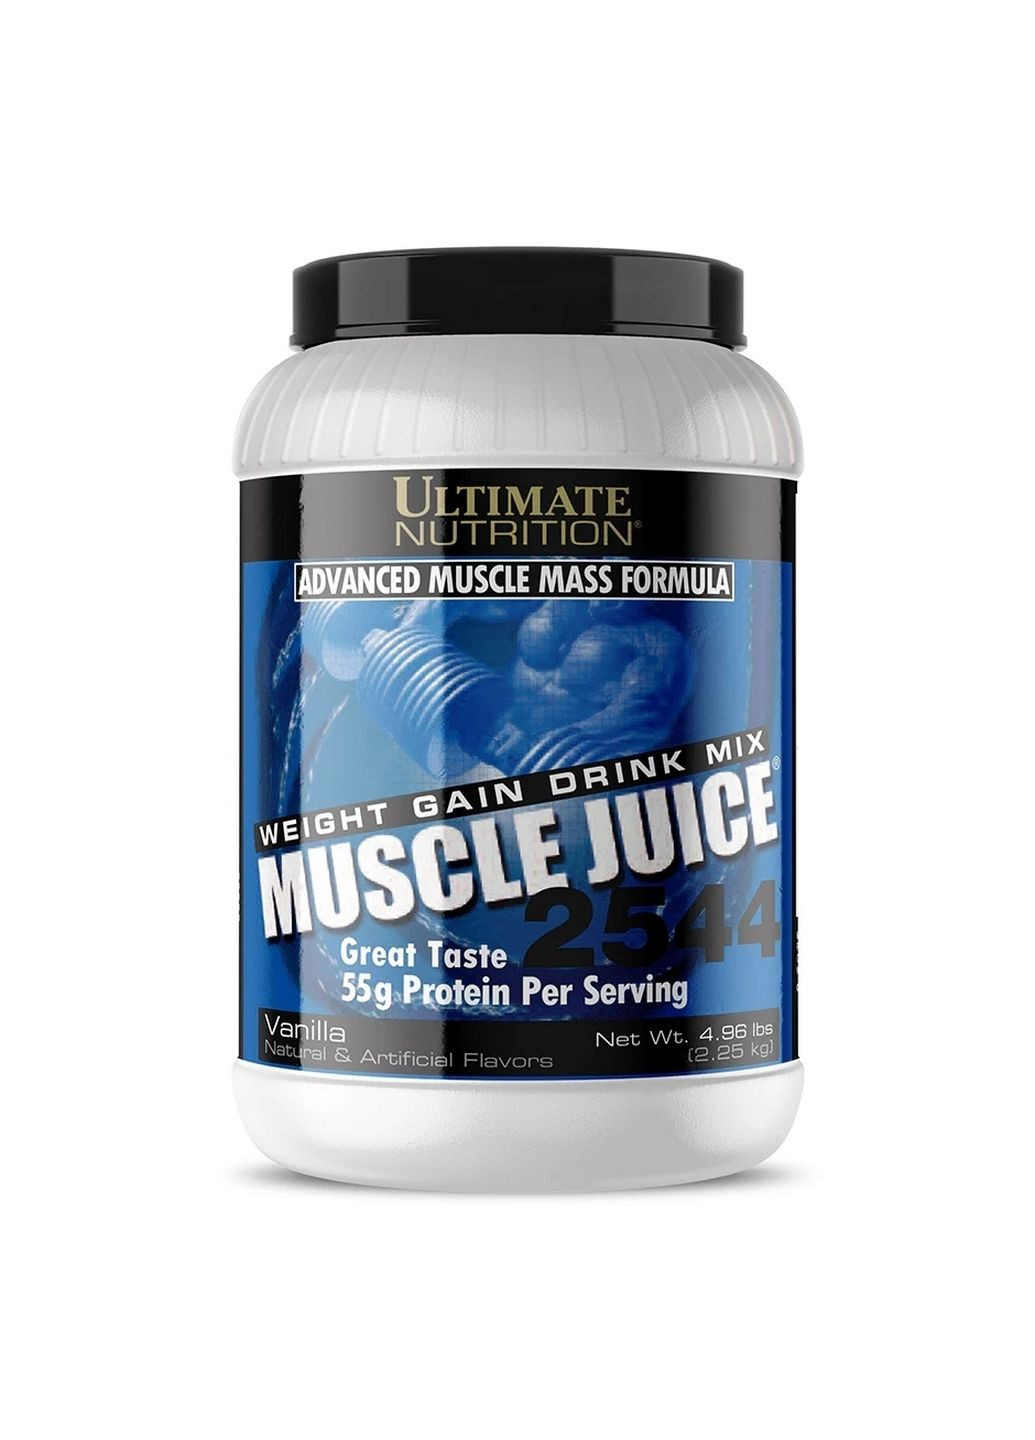 Гейнер Ultimate Muscle Juice 2544, 2.25 кг Ваніль Ultimate Nutrition (293478176)